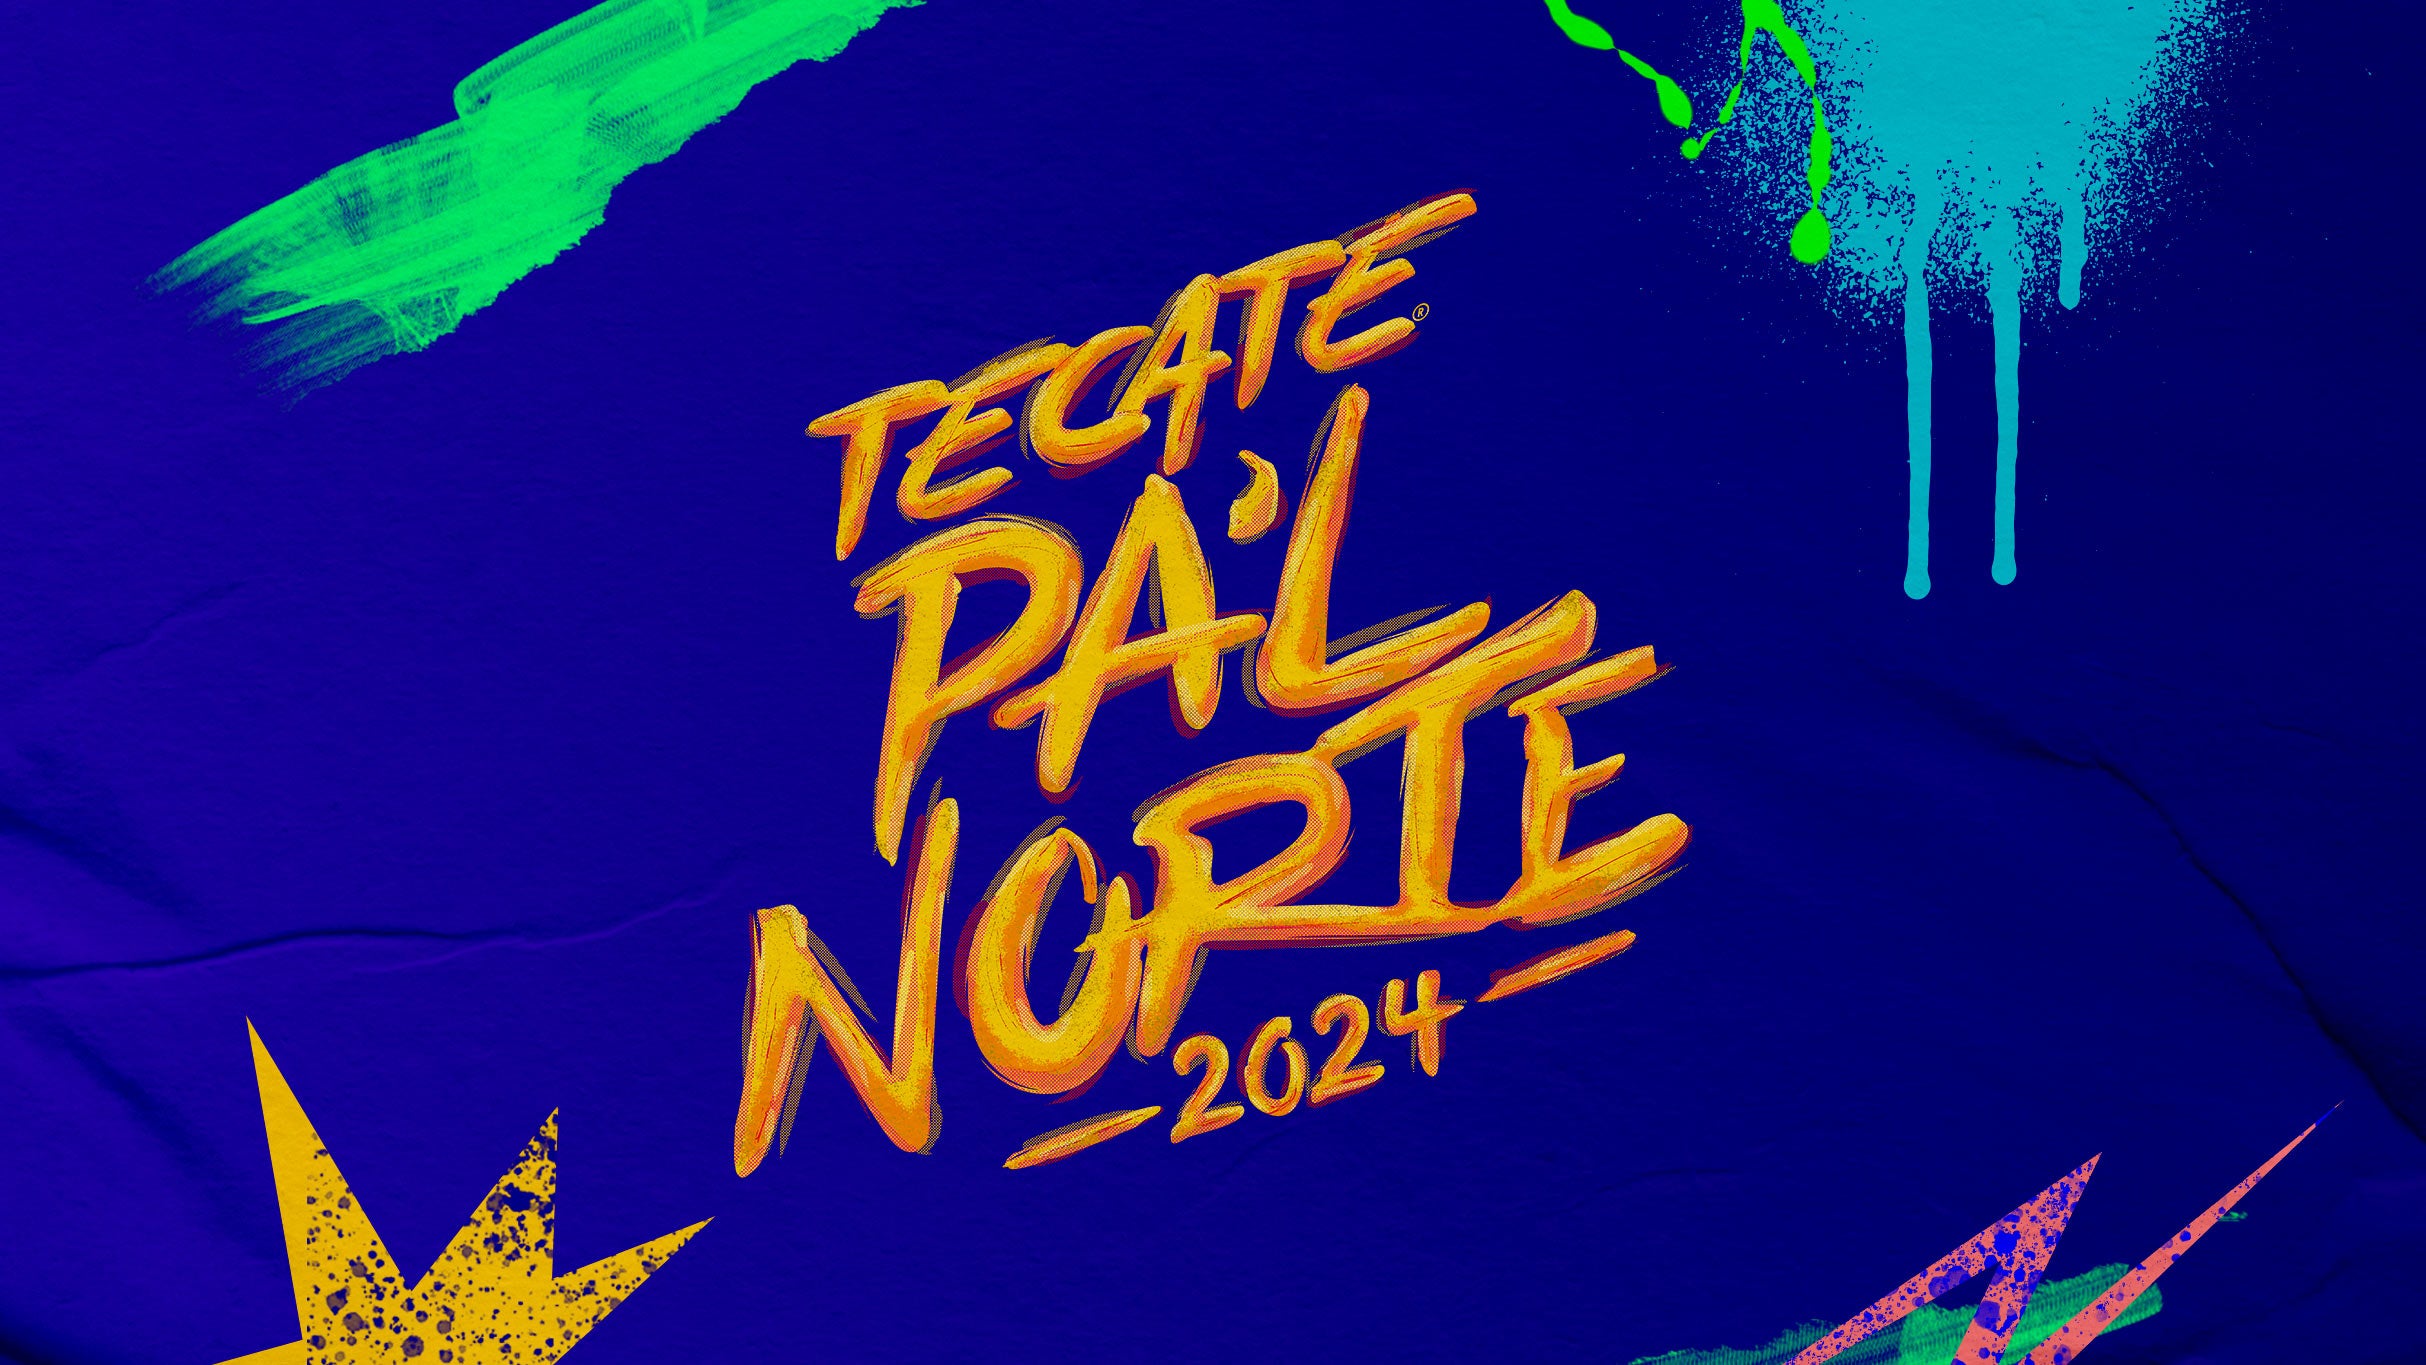 Tecate Pal Norte 2024 (Abono Hospitality)